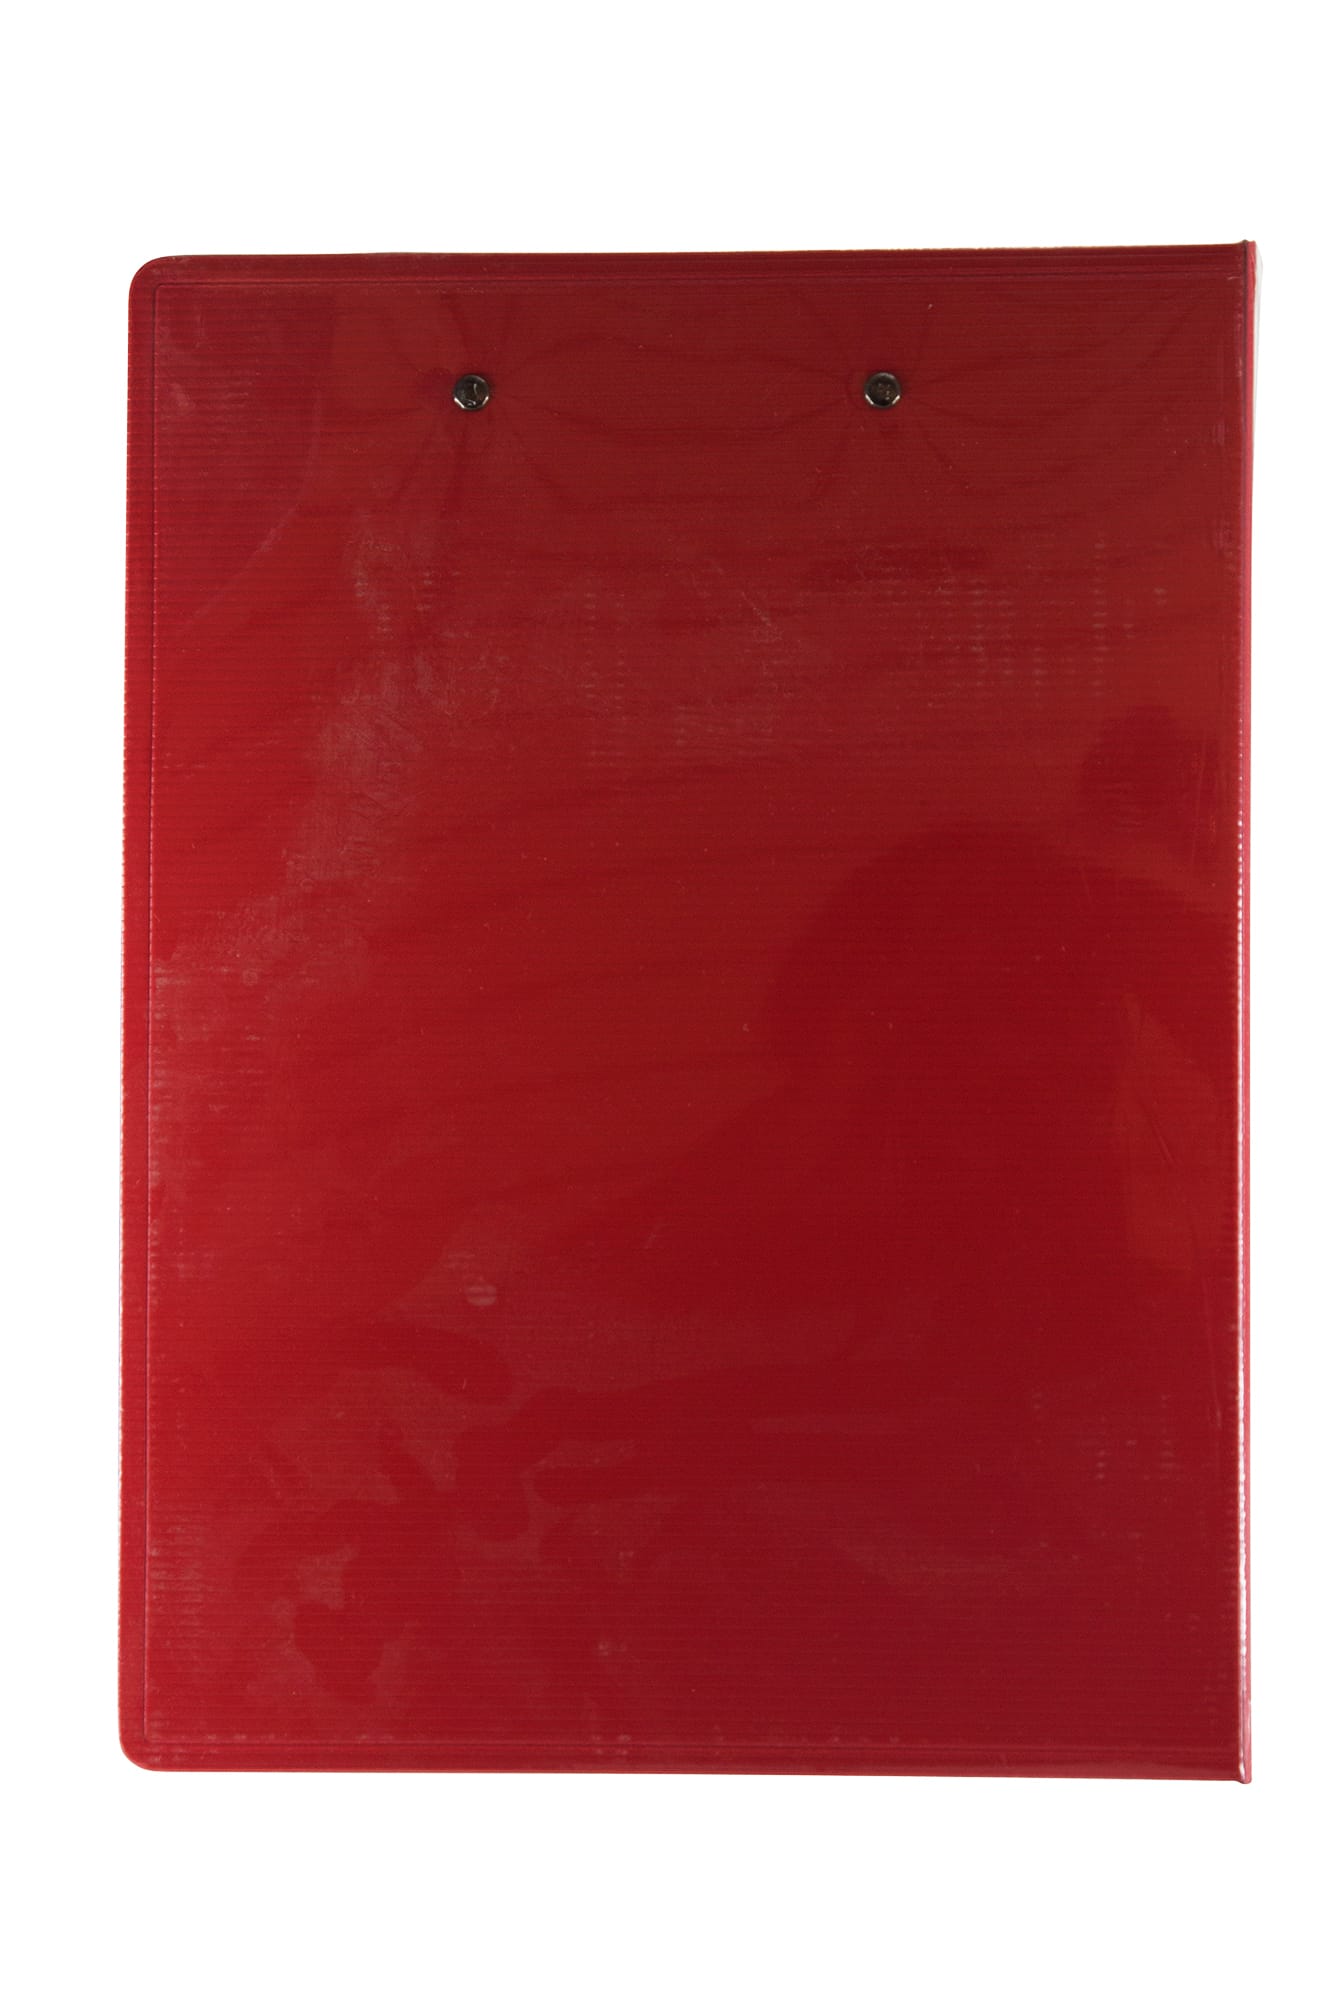 Mobile Ops Portfolio Clipboard Vertical RED (61632)